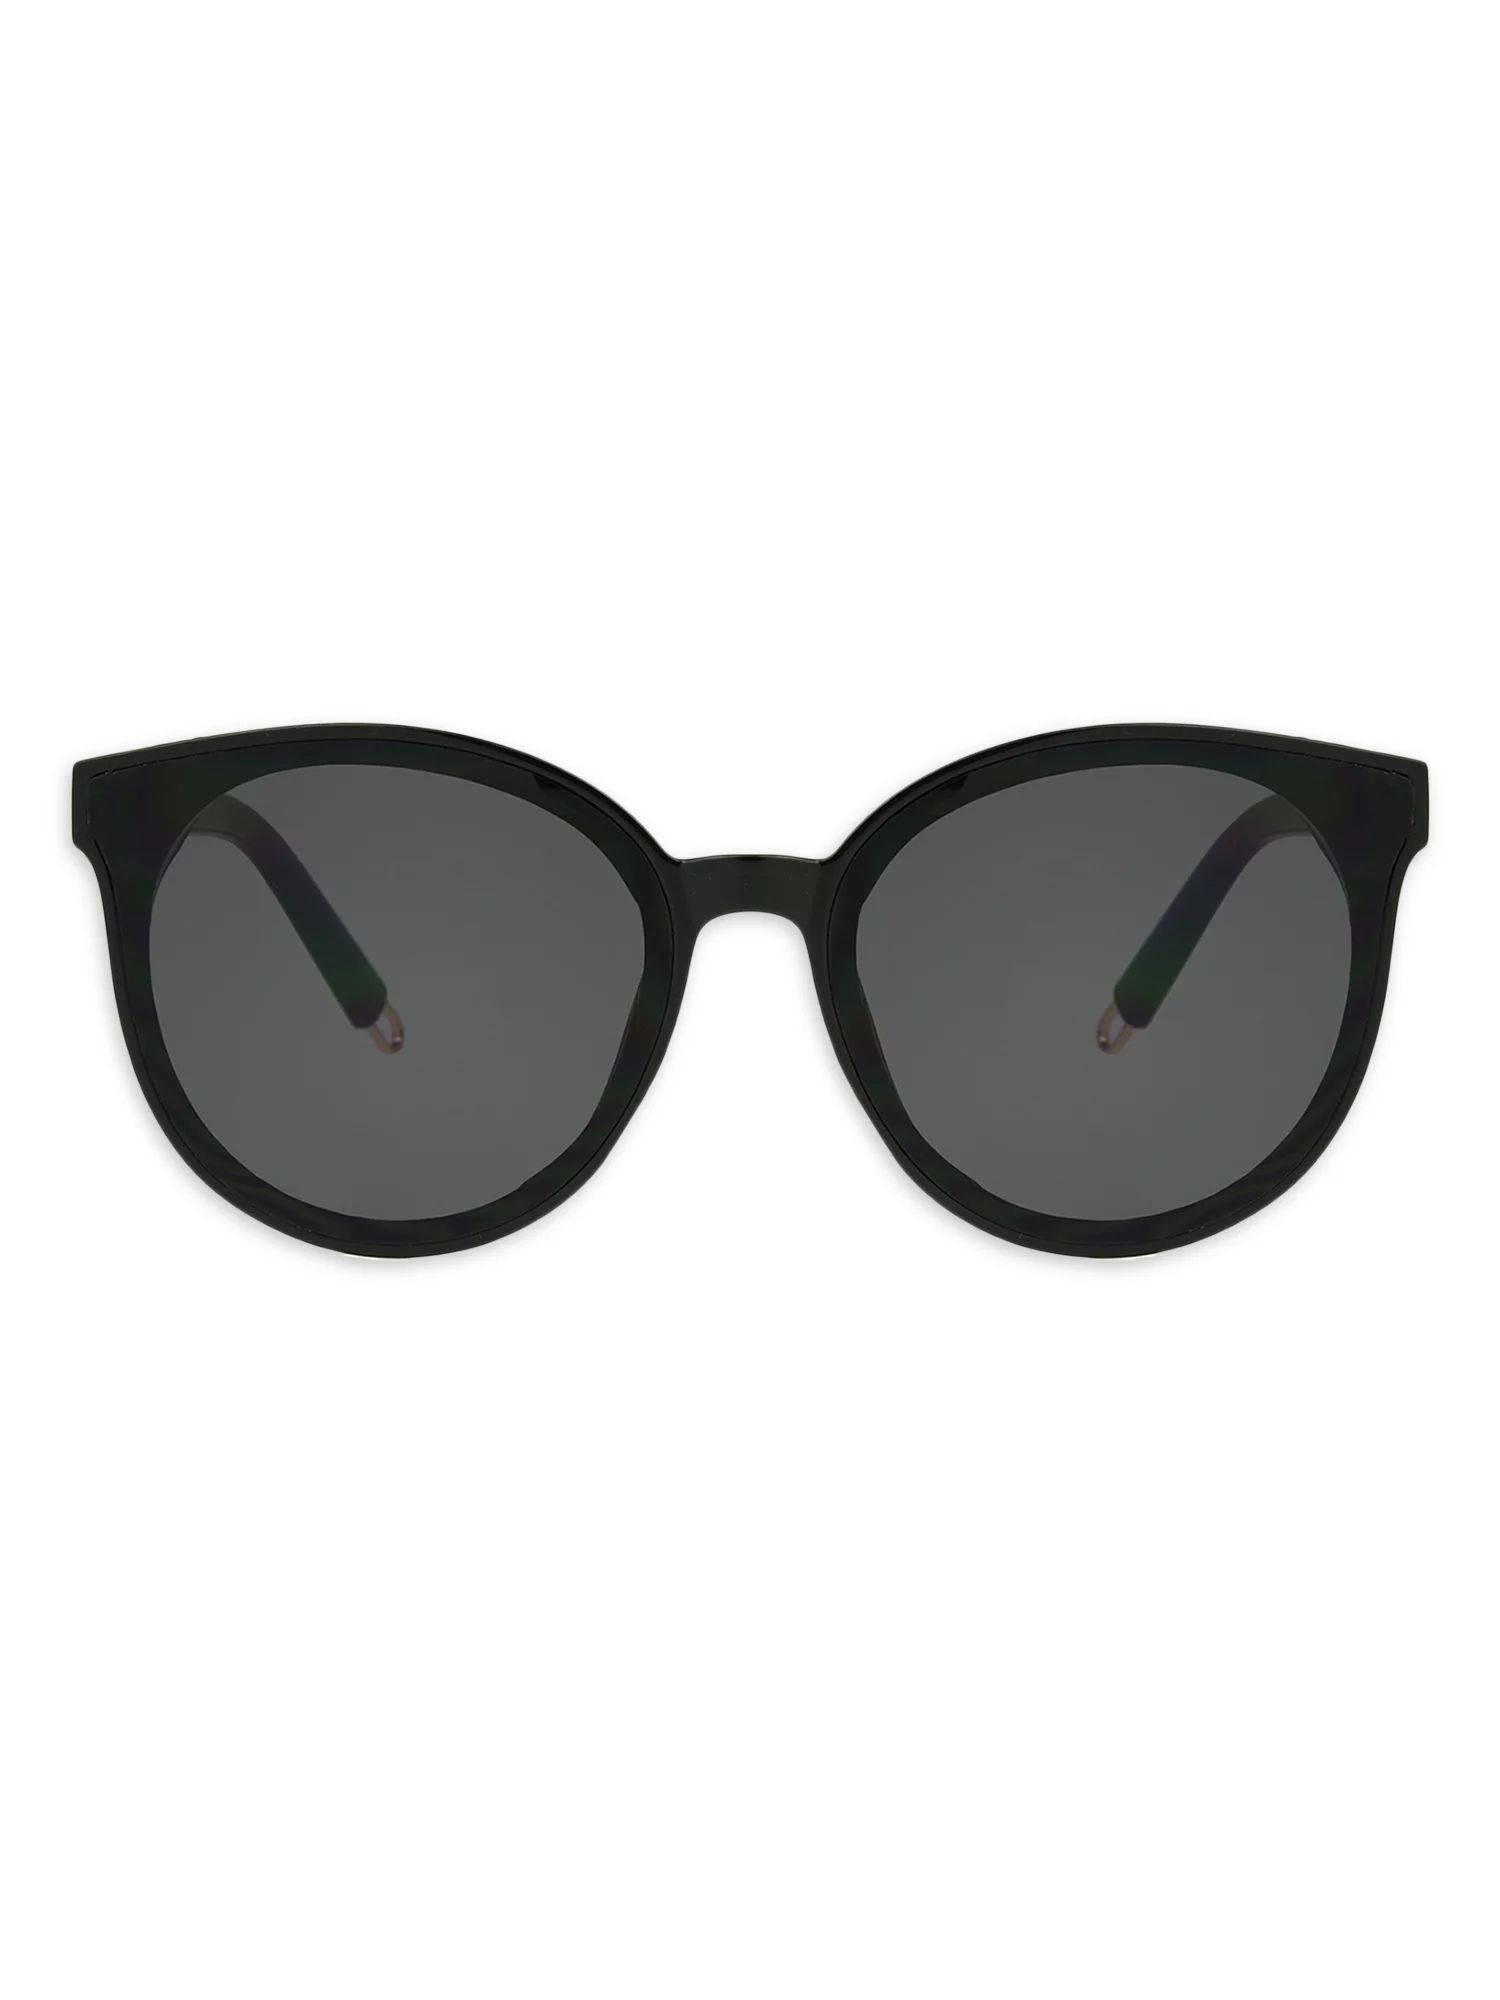 Foster Grant Women's Round Black Adult Sunglasses | Walmart (US)